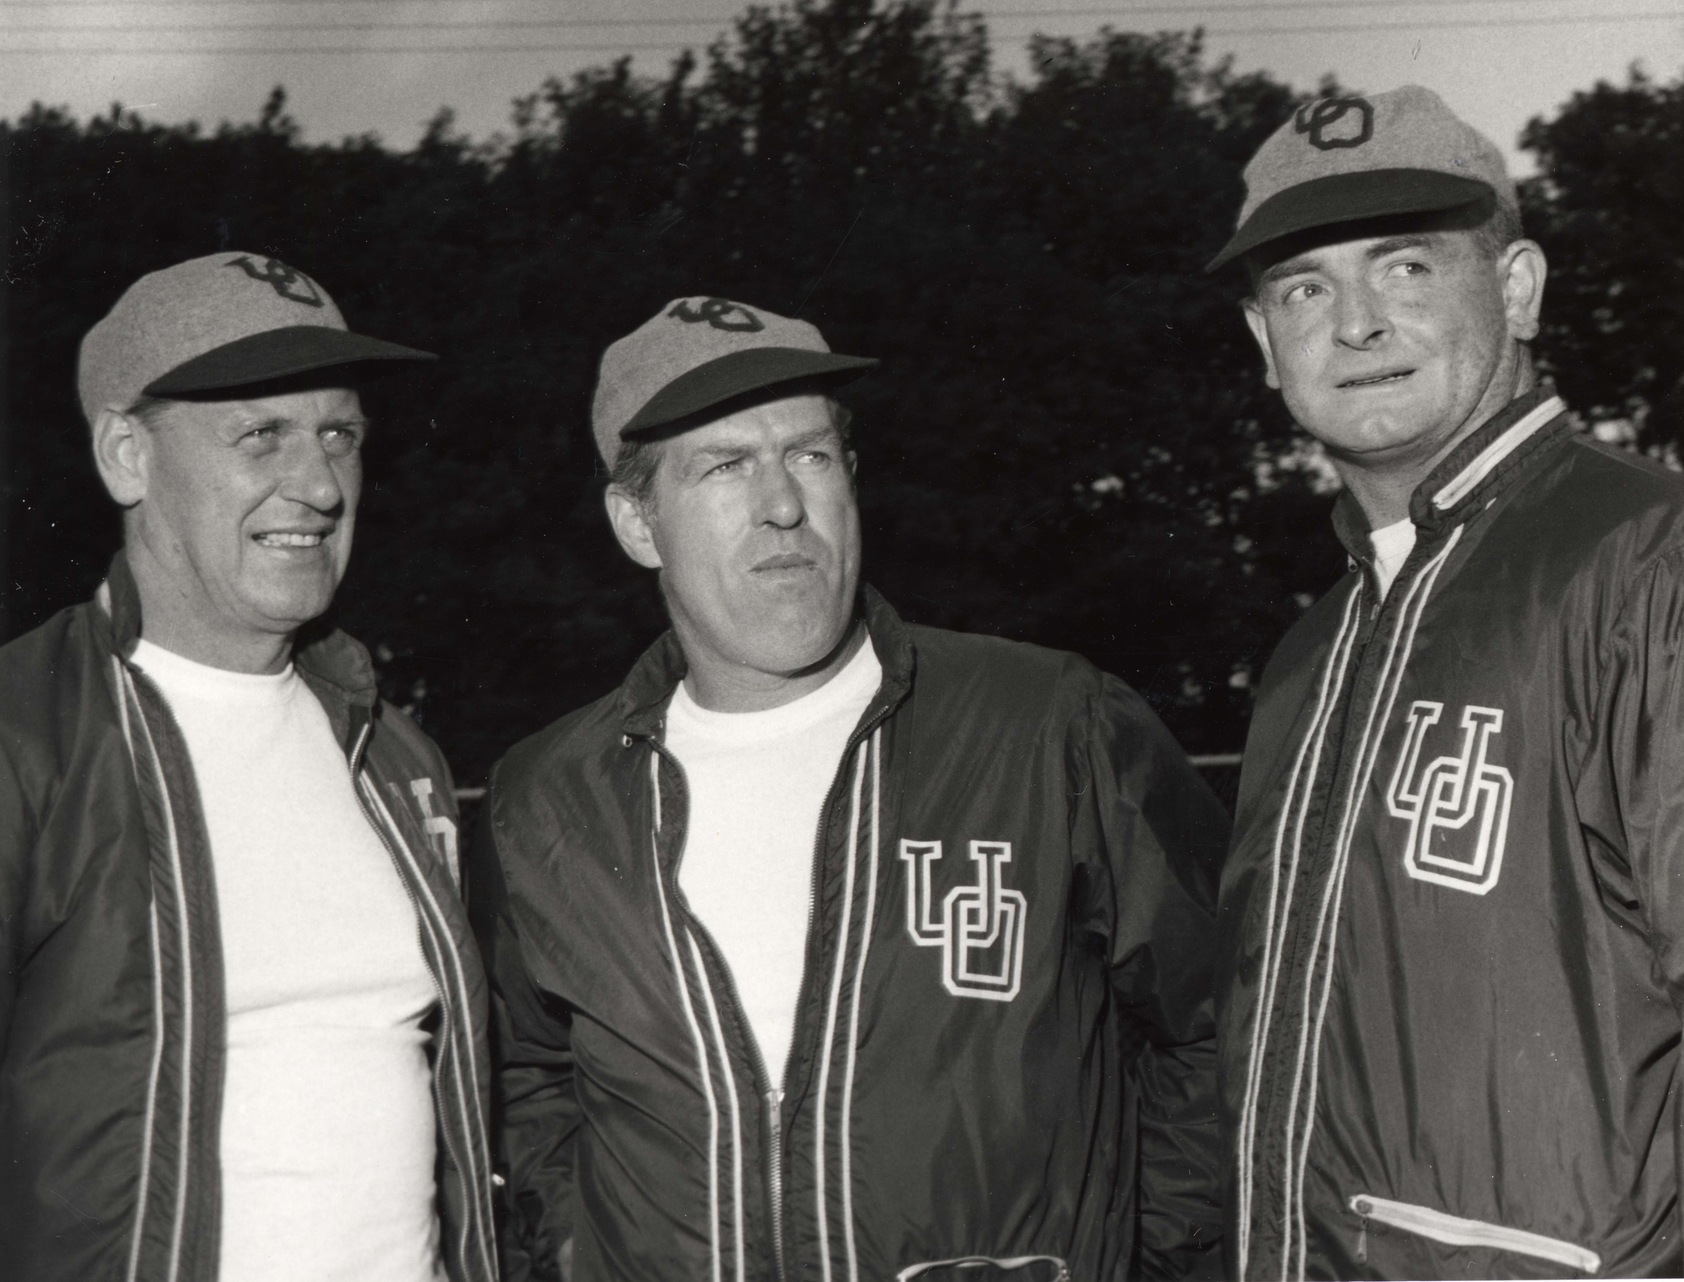 Black and white photo of three football coaches.